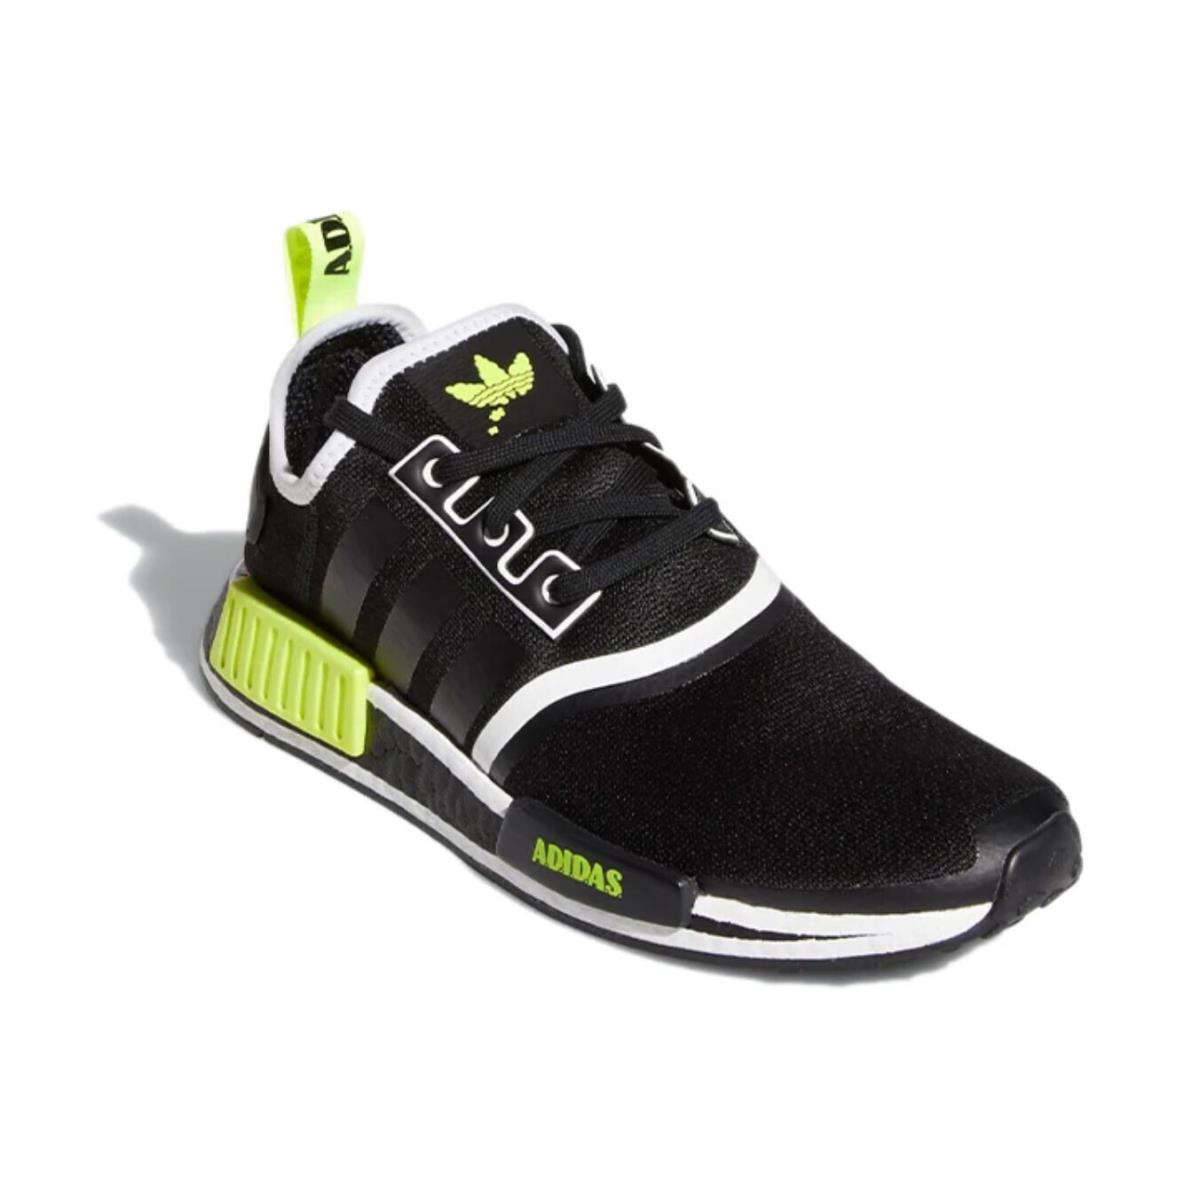 Mens Adidas Originals Nmd R1 Runner Running Shoes Size US 10 GV7183